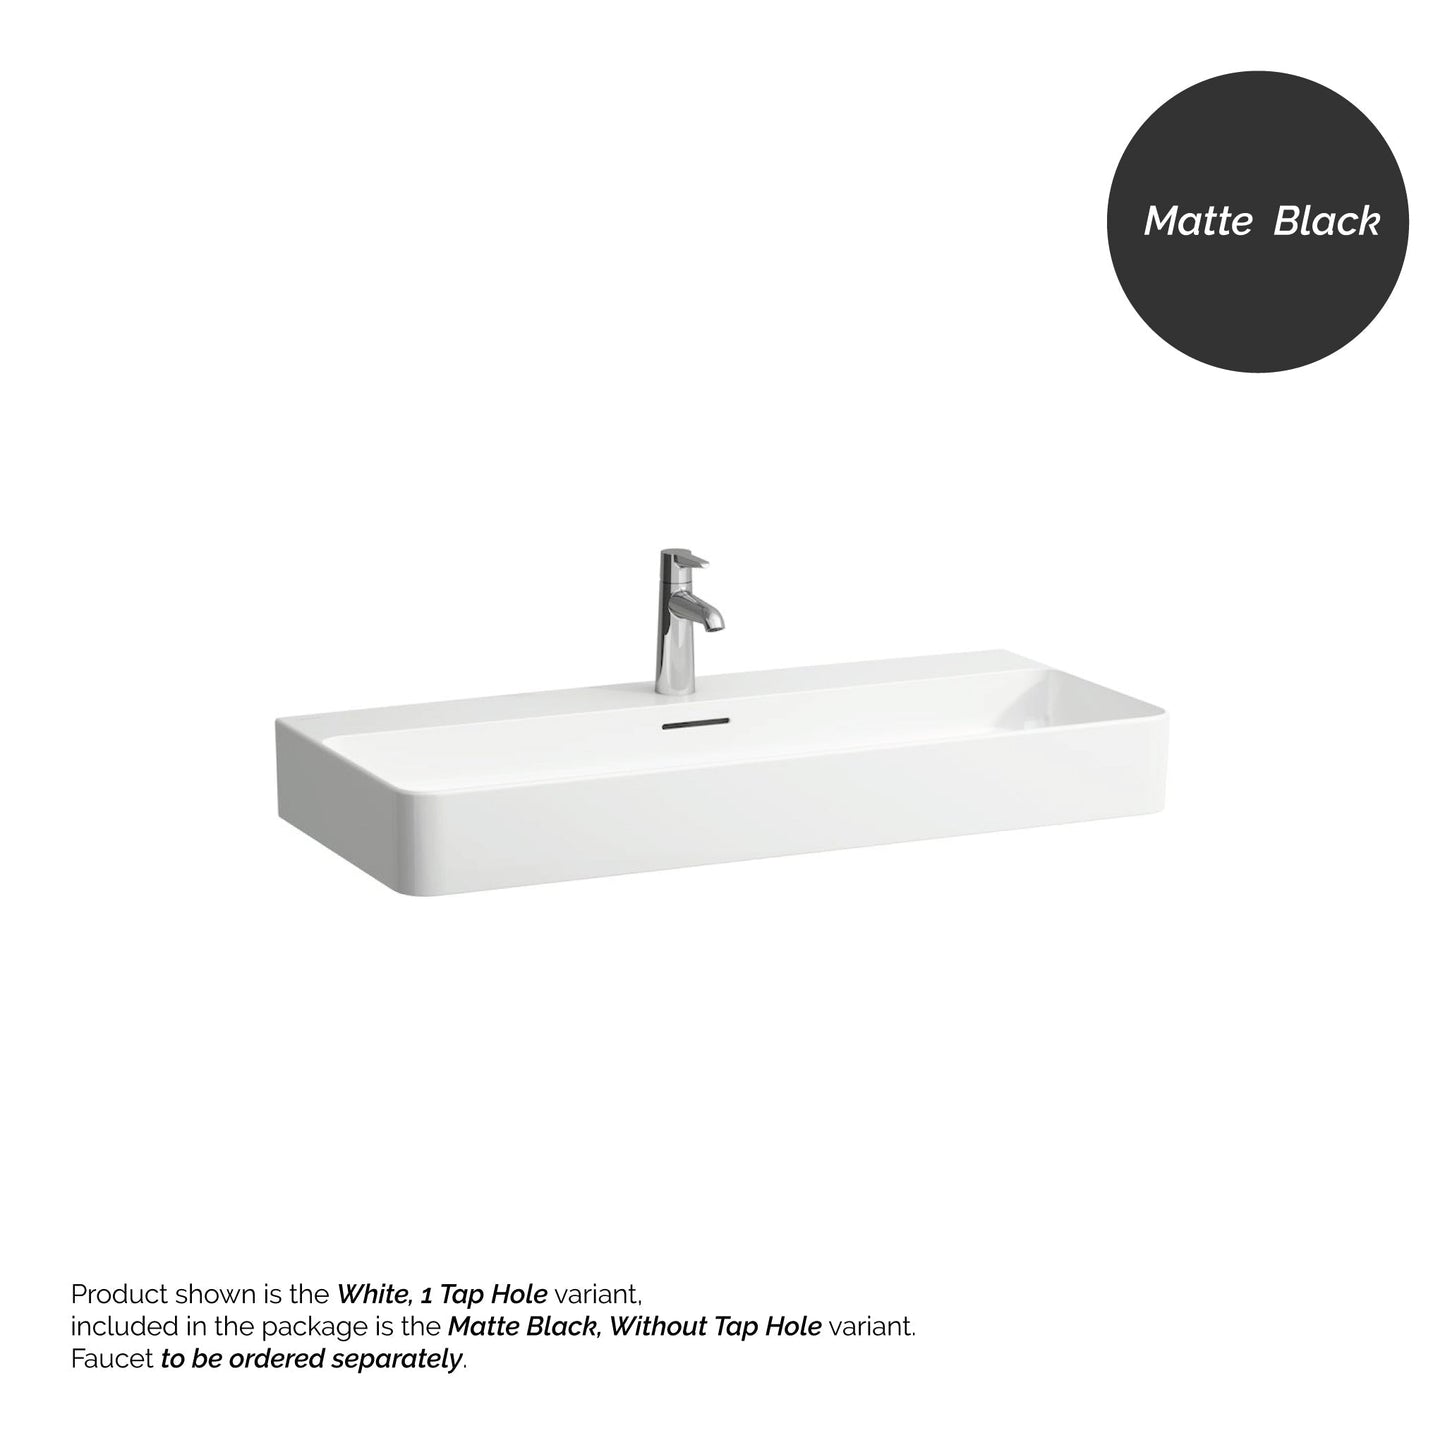 Laufen Val 37" x 17" Matte Black Ceramic Countertop Bathroom Sink Without Faucet Hole